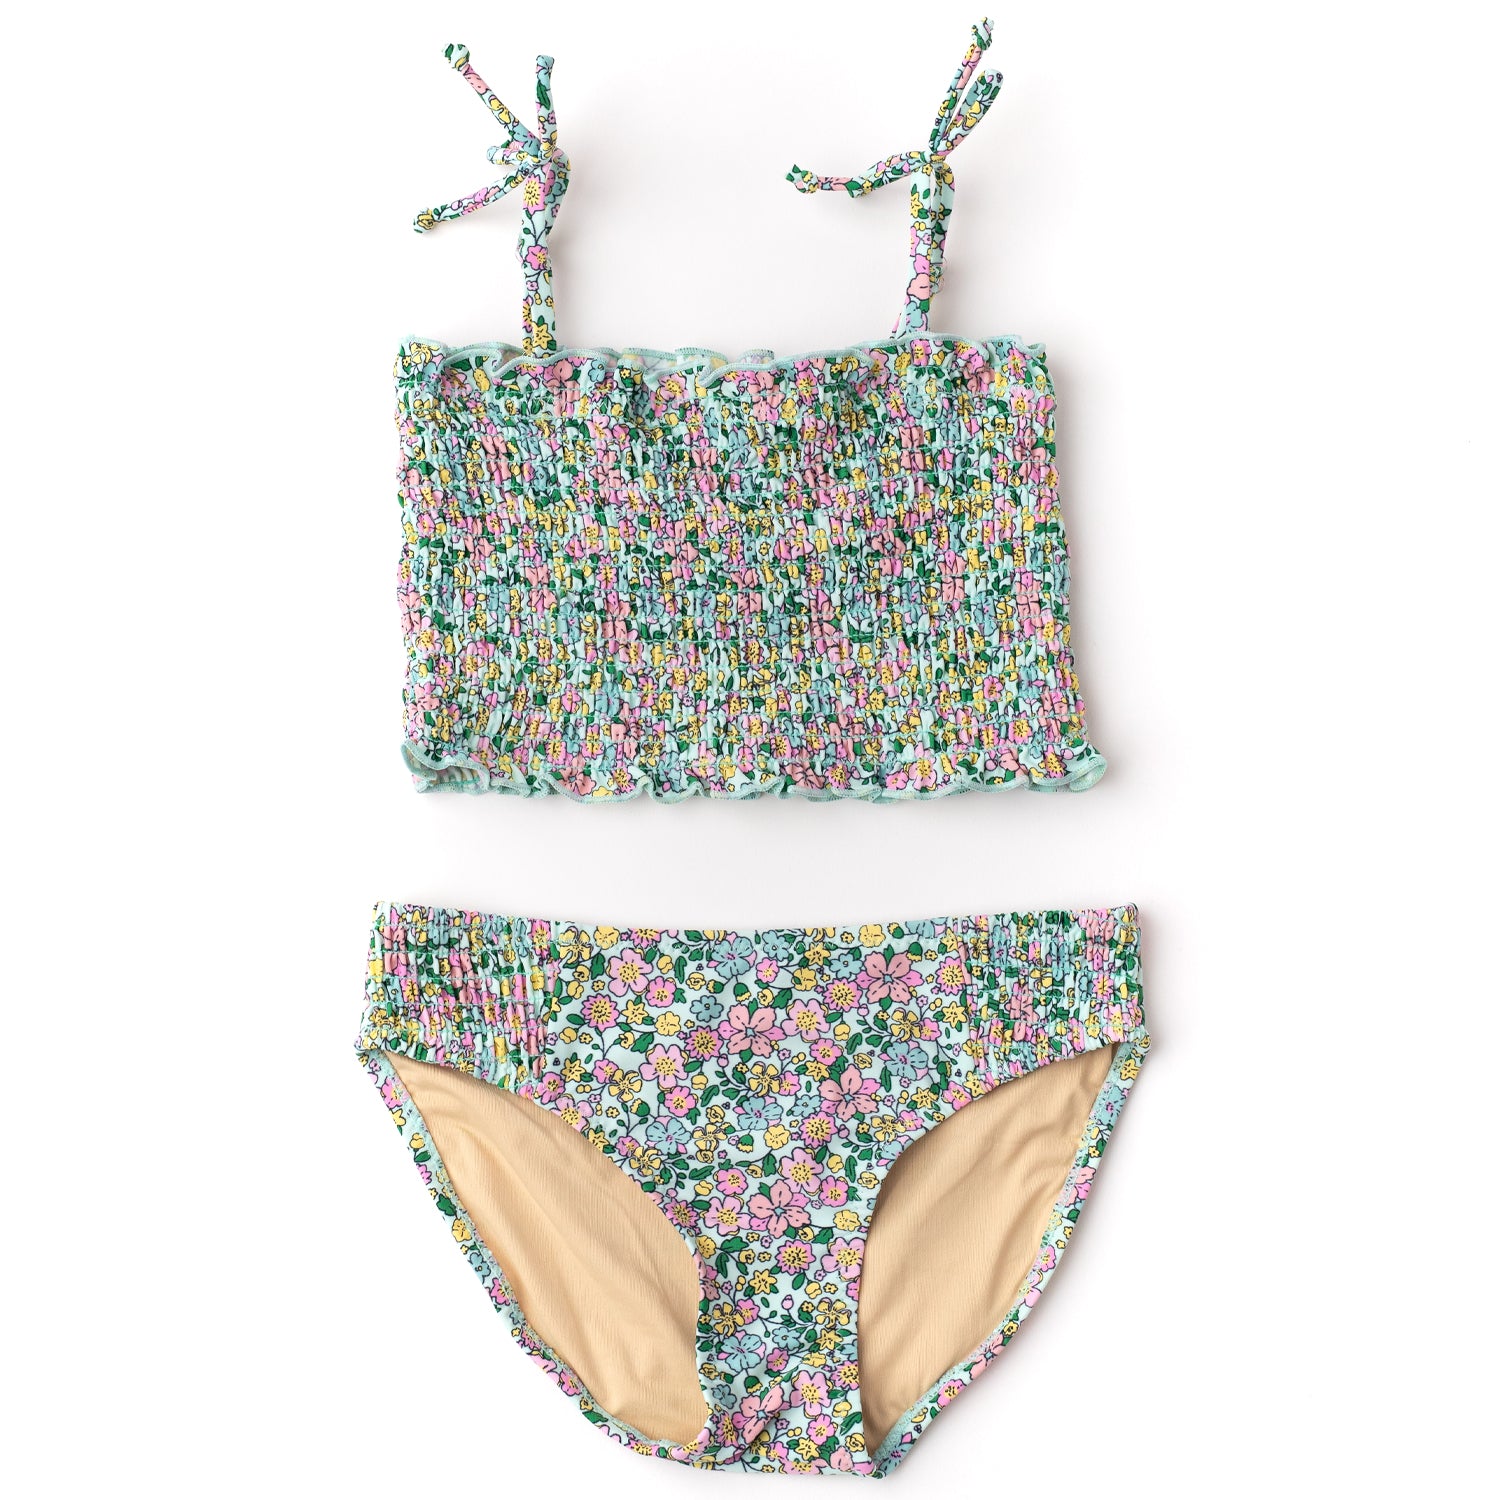 Smocked Bikini - Mint Ditsy Floral